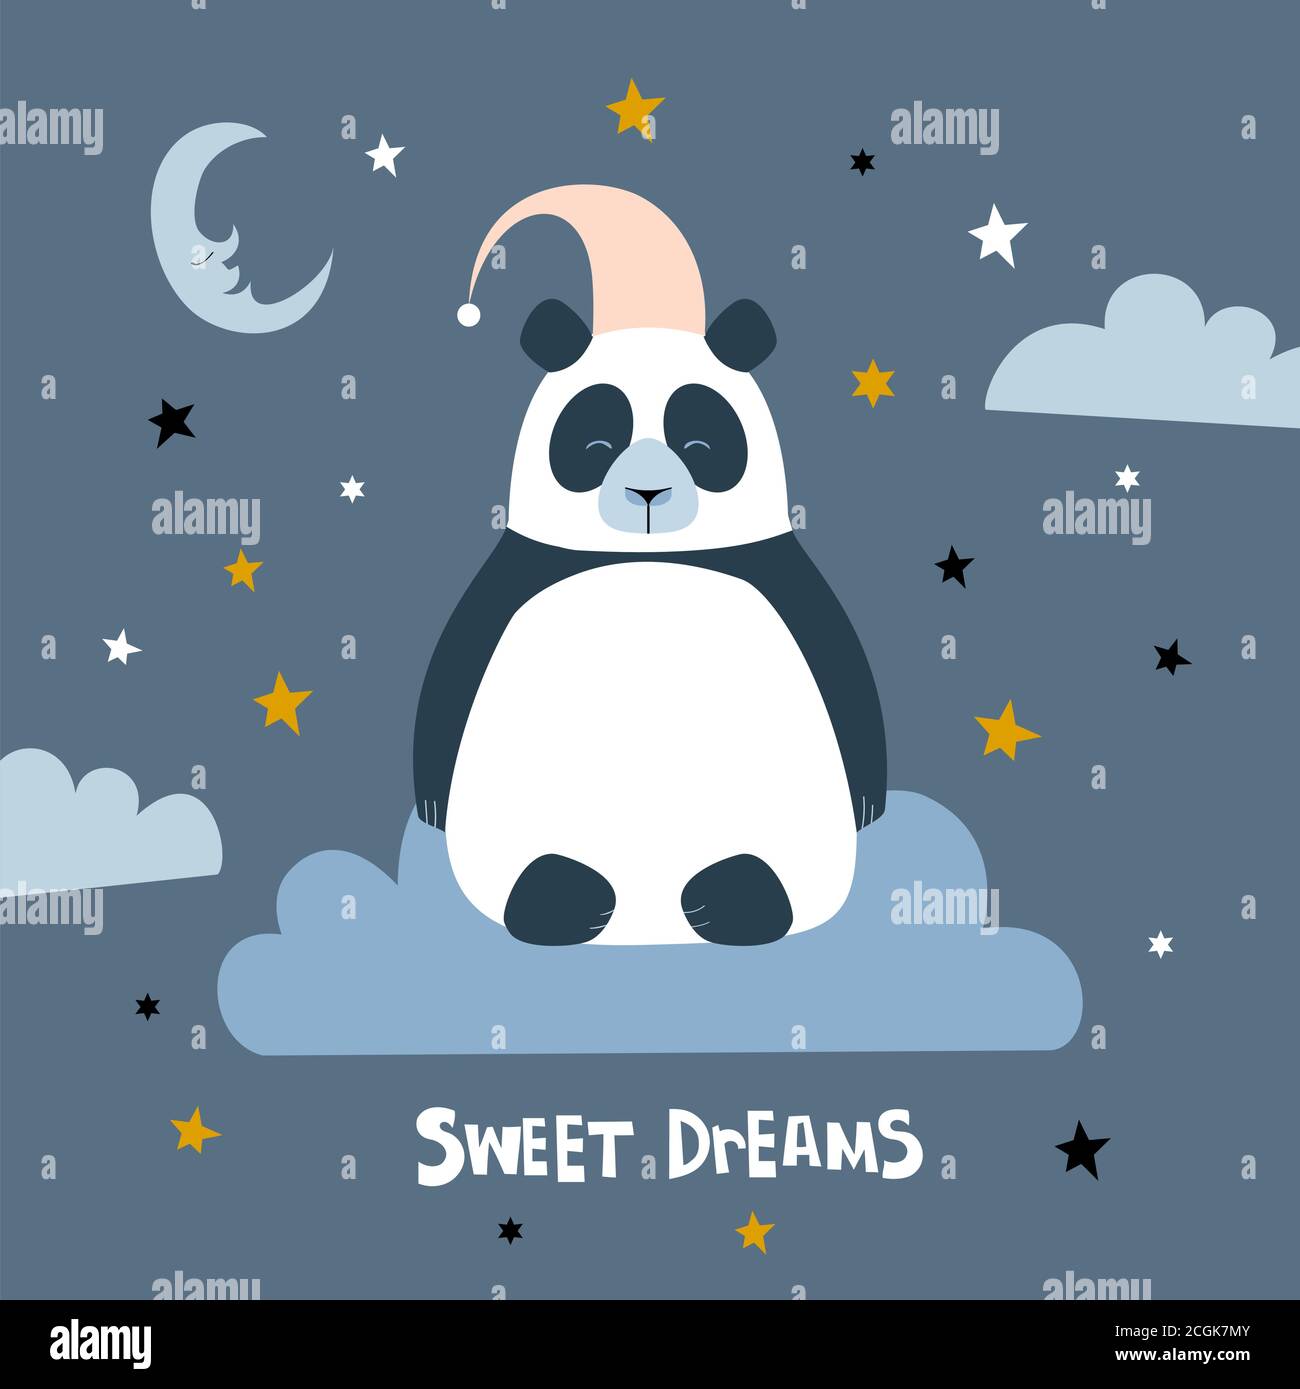 Sweet dreams quote with doodles. Cute cartoon panda vector design ...